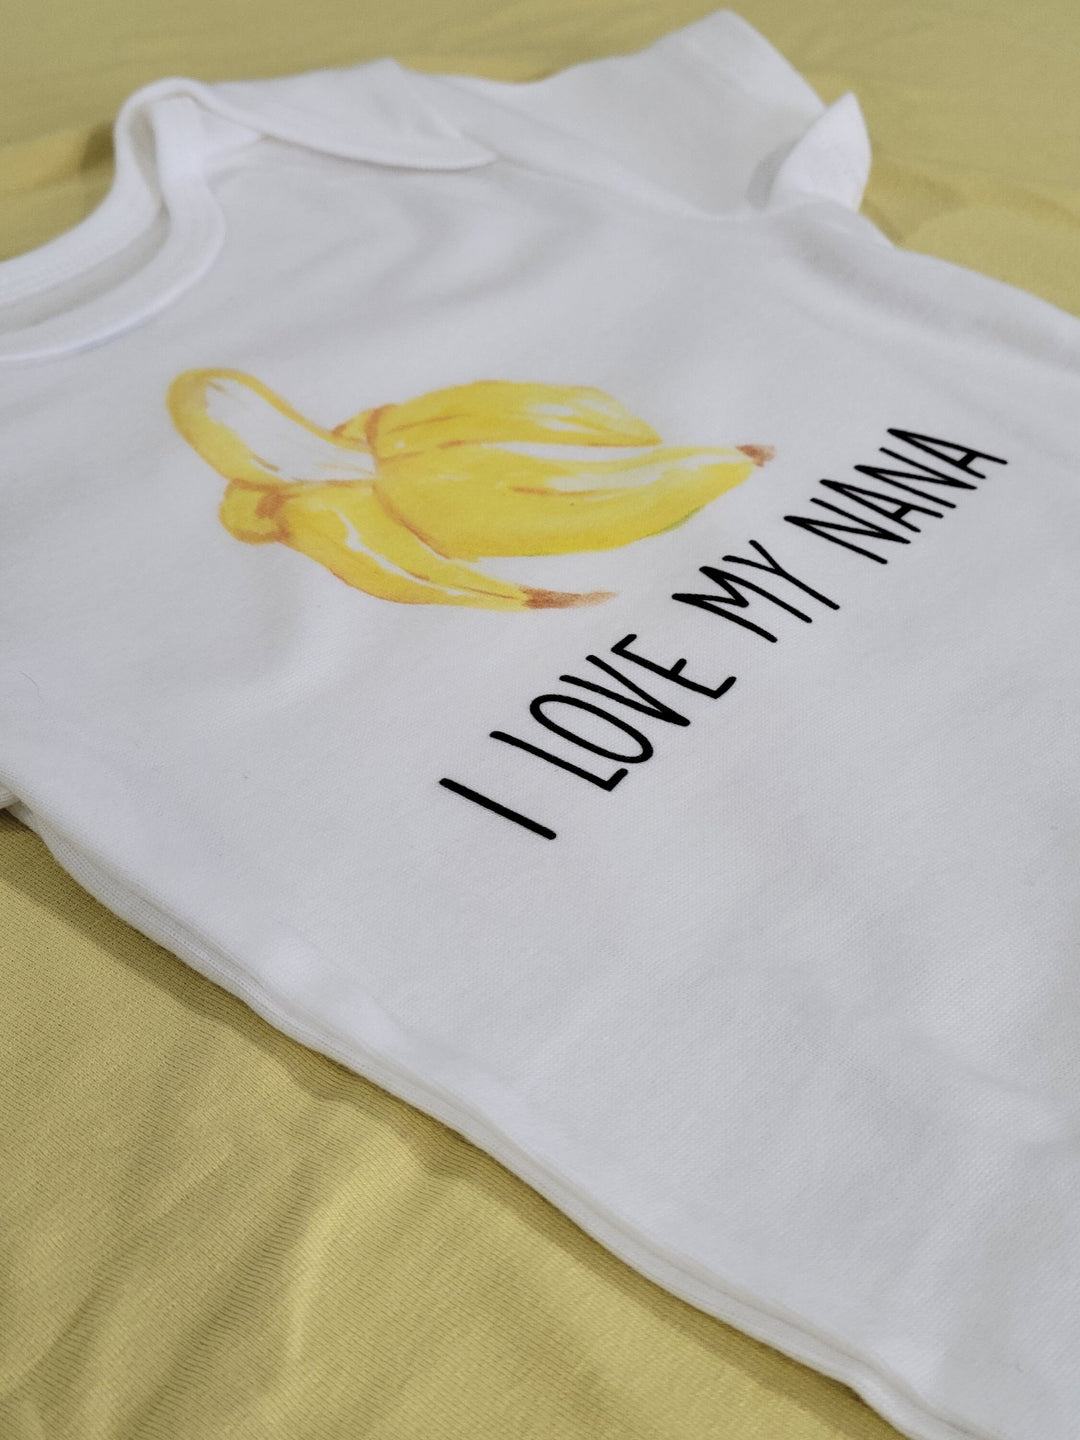 Banana Love Nana - Baby Boy Girl Clothes Infant Bodysuit Funny Cute Newborn